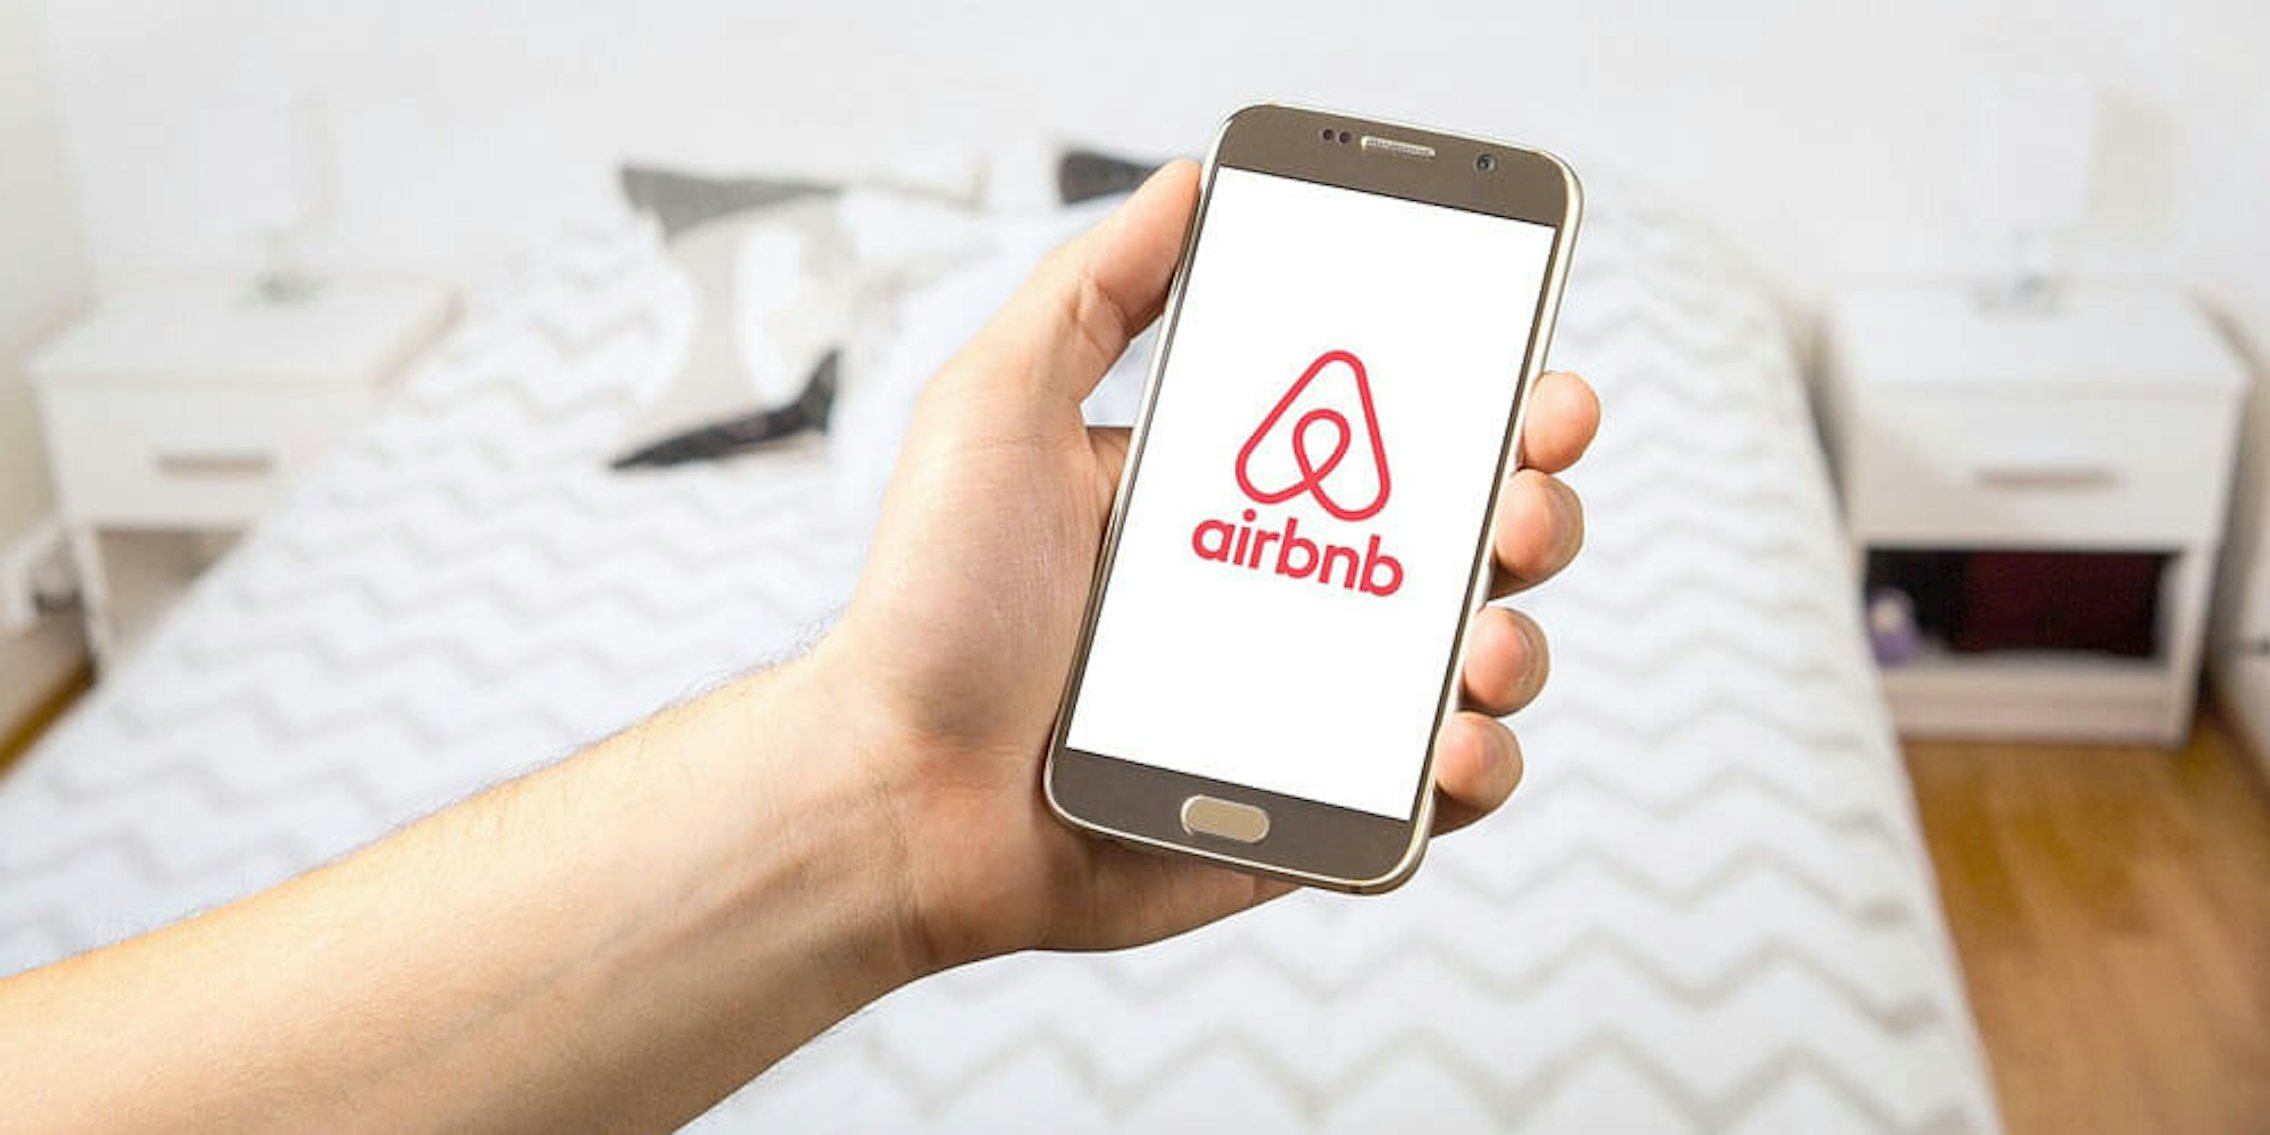 airbnb-verify-all-listings